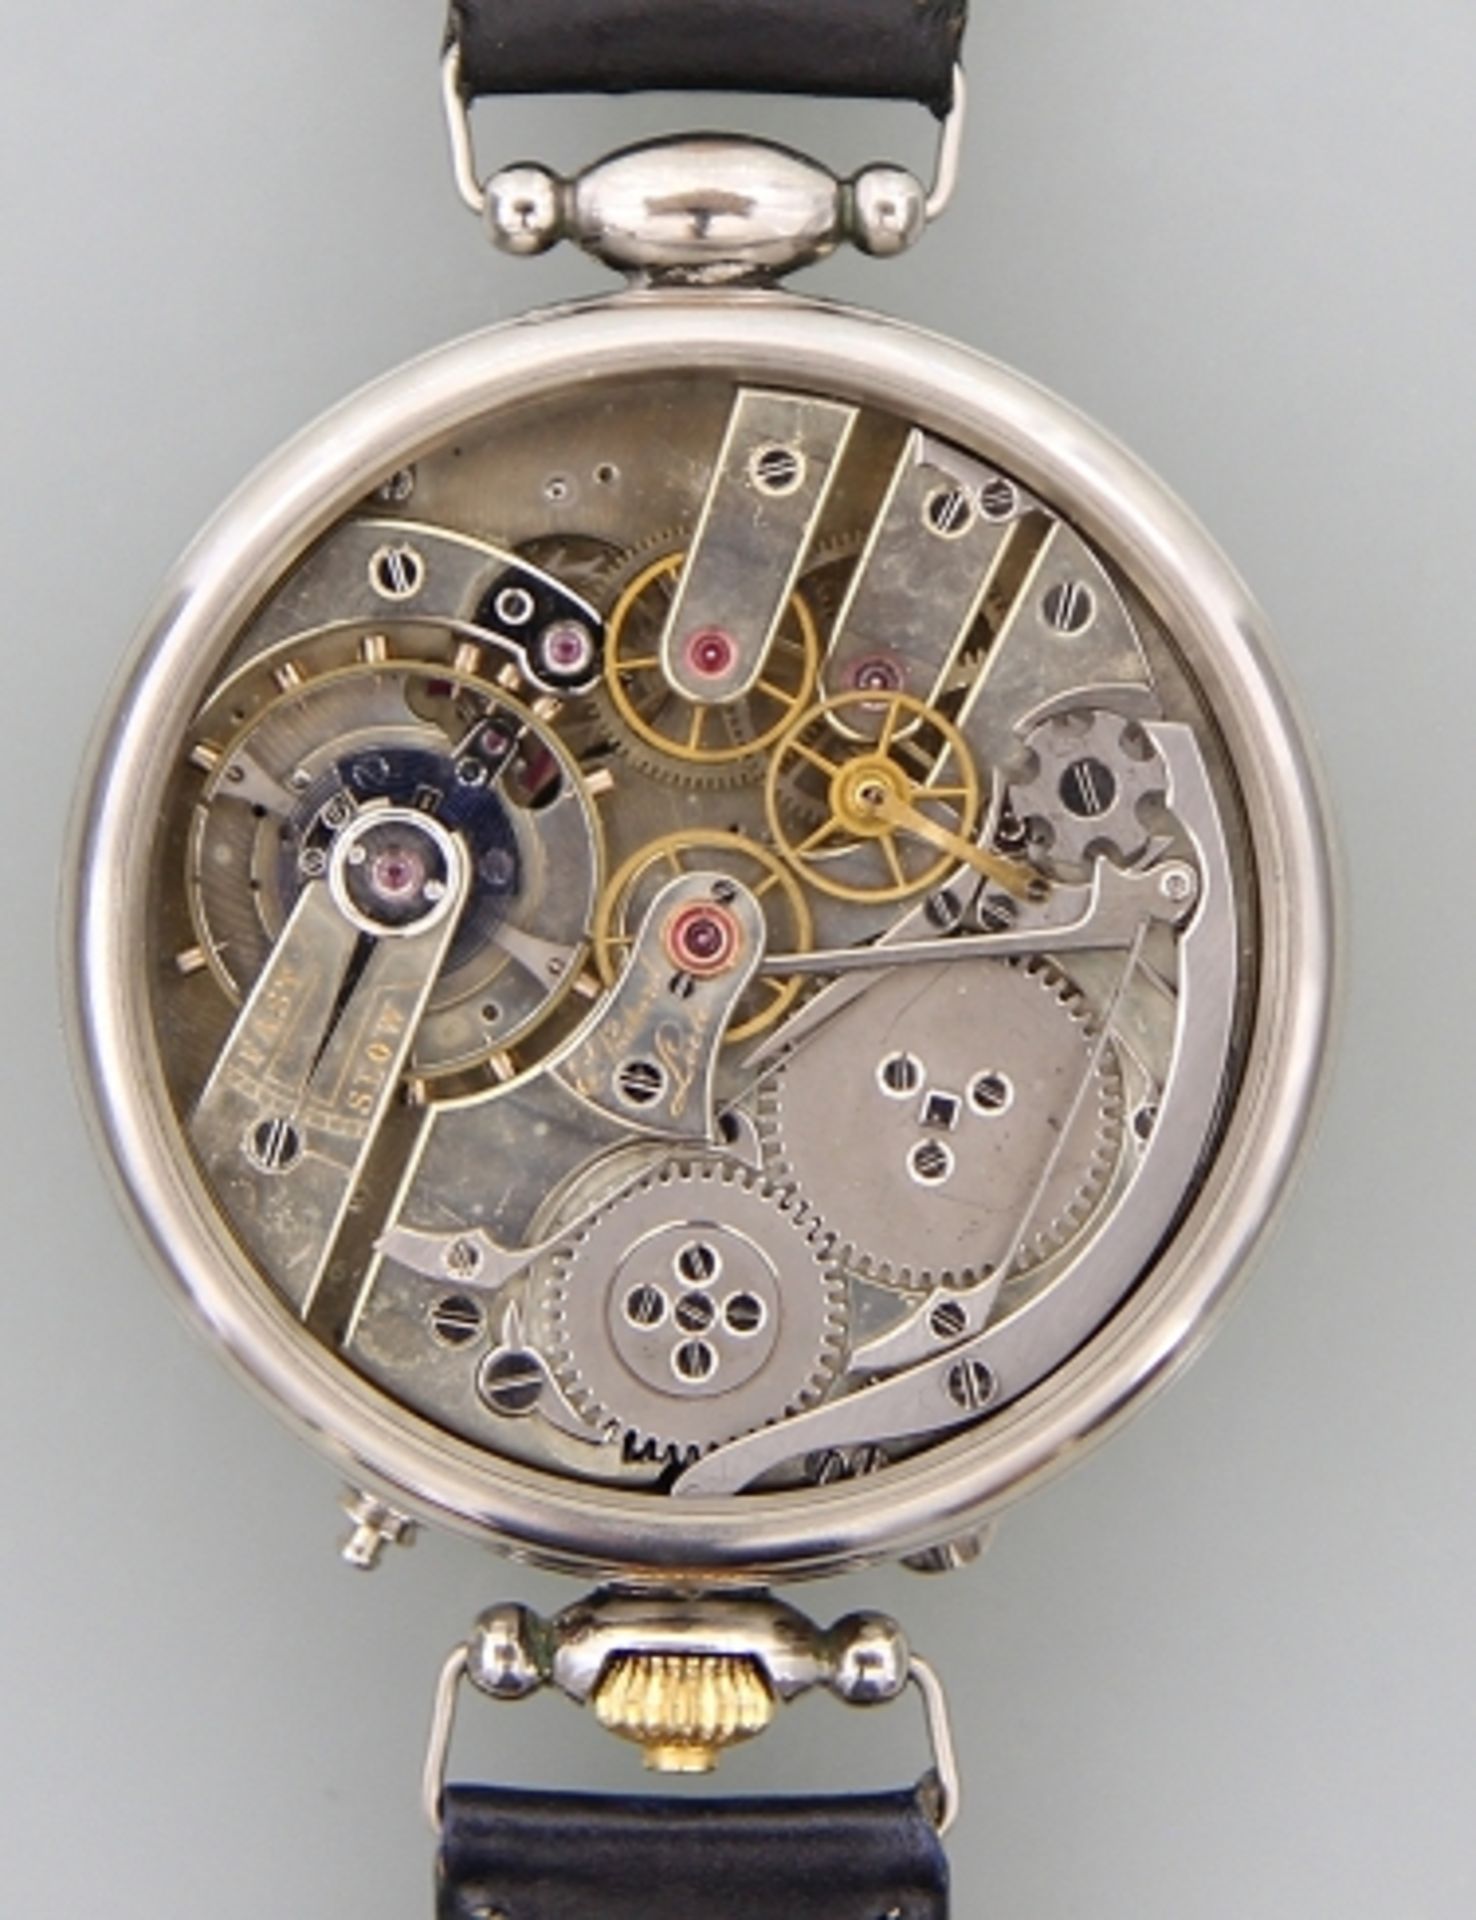 HTU - Rattrapante - Chronograph "Edouard Richard" - Image 2 of 2